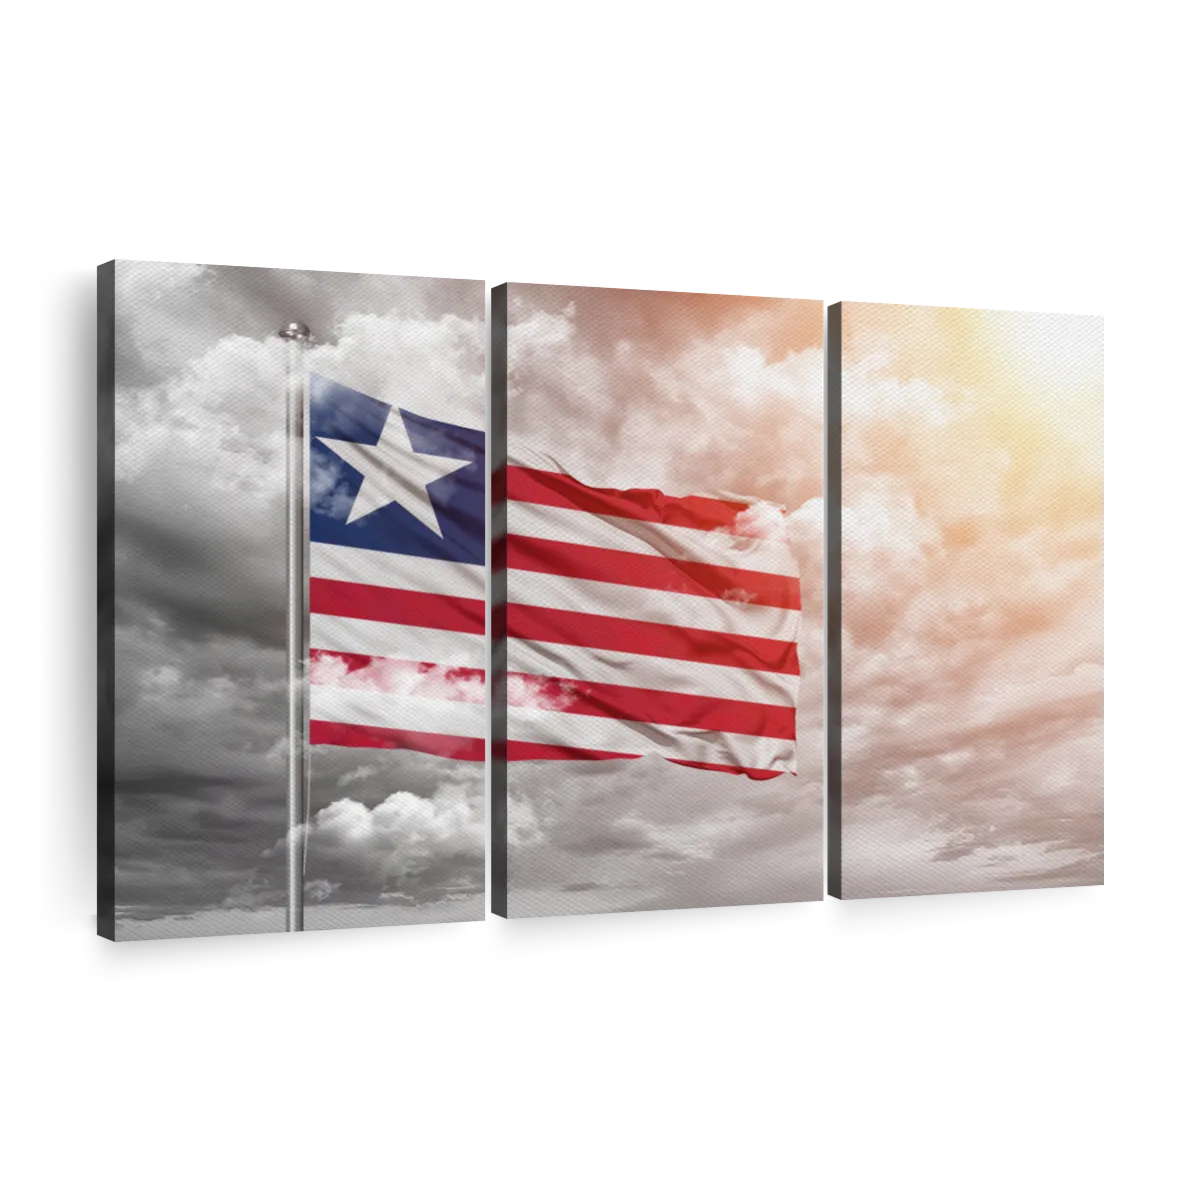 Liberia Flag Wallpapers